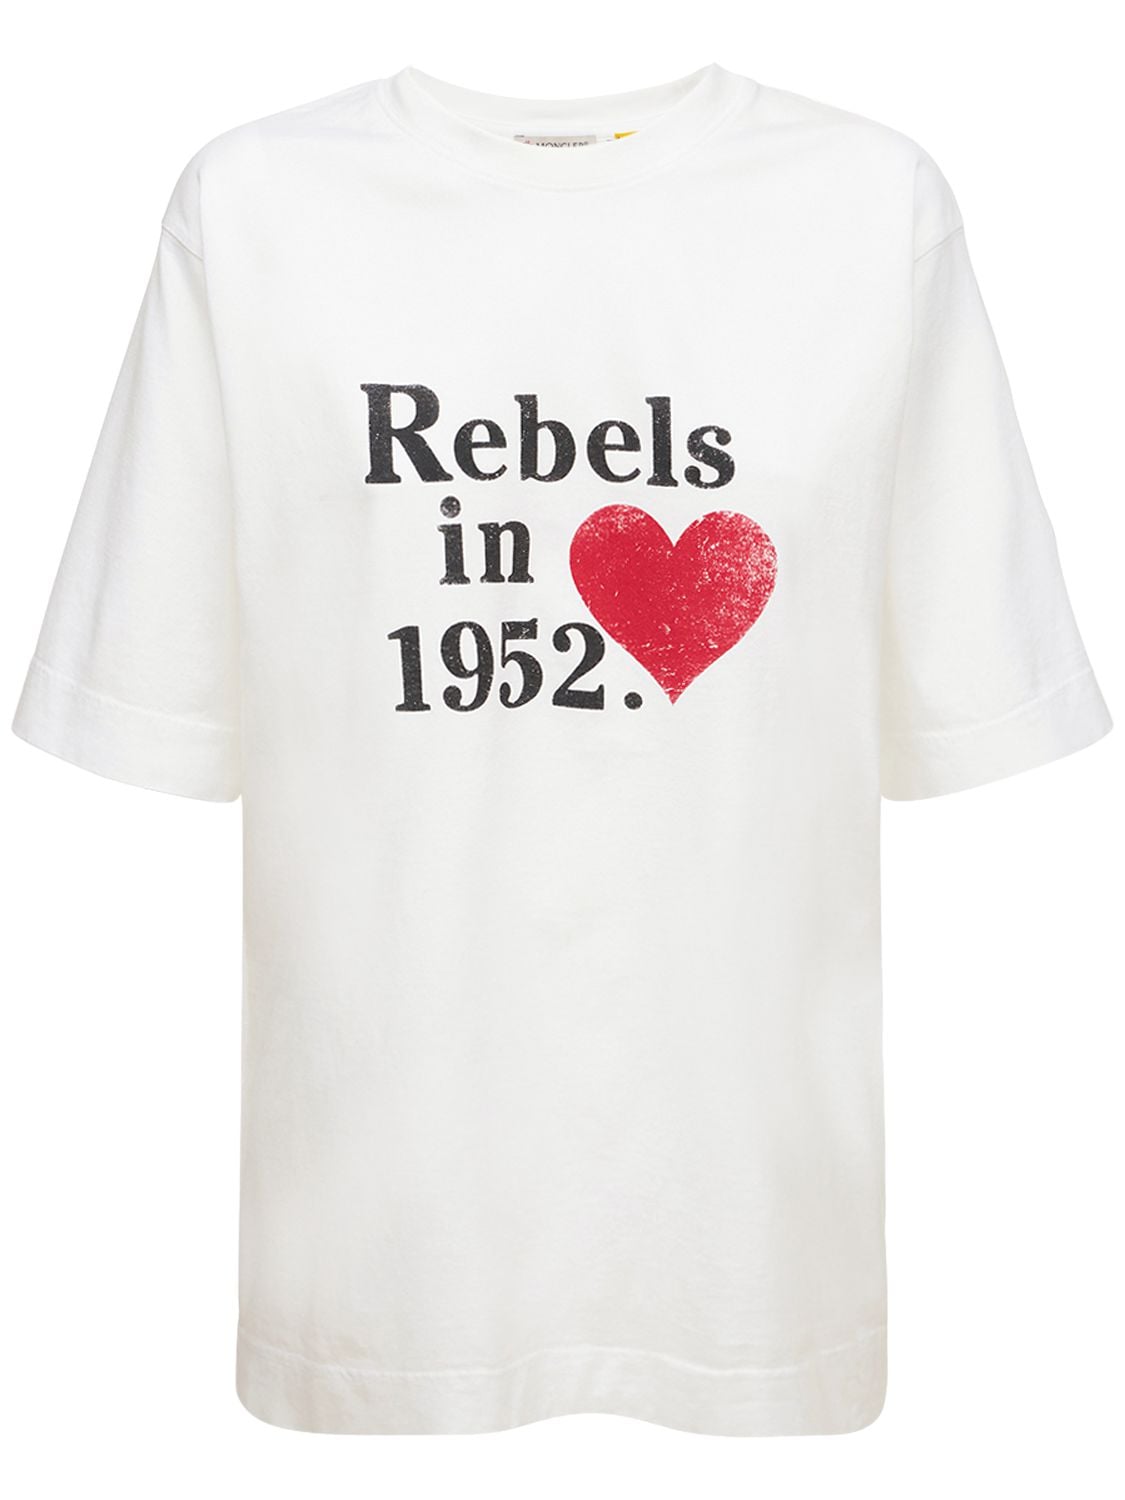 T-shirt En Jersey De Coton Imprimé Rebels - MONCLER GENIUS - Modalova